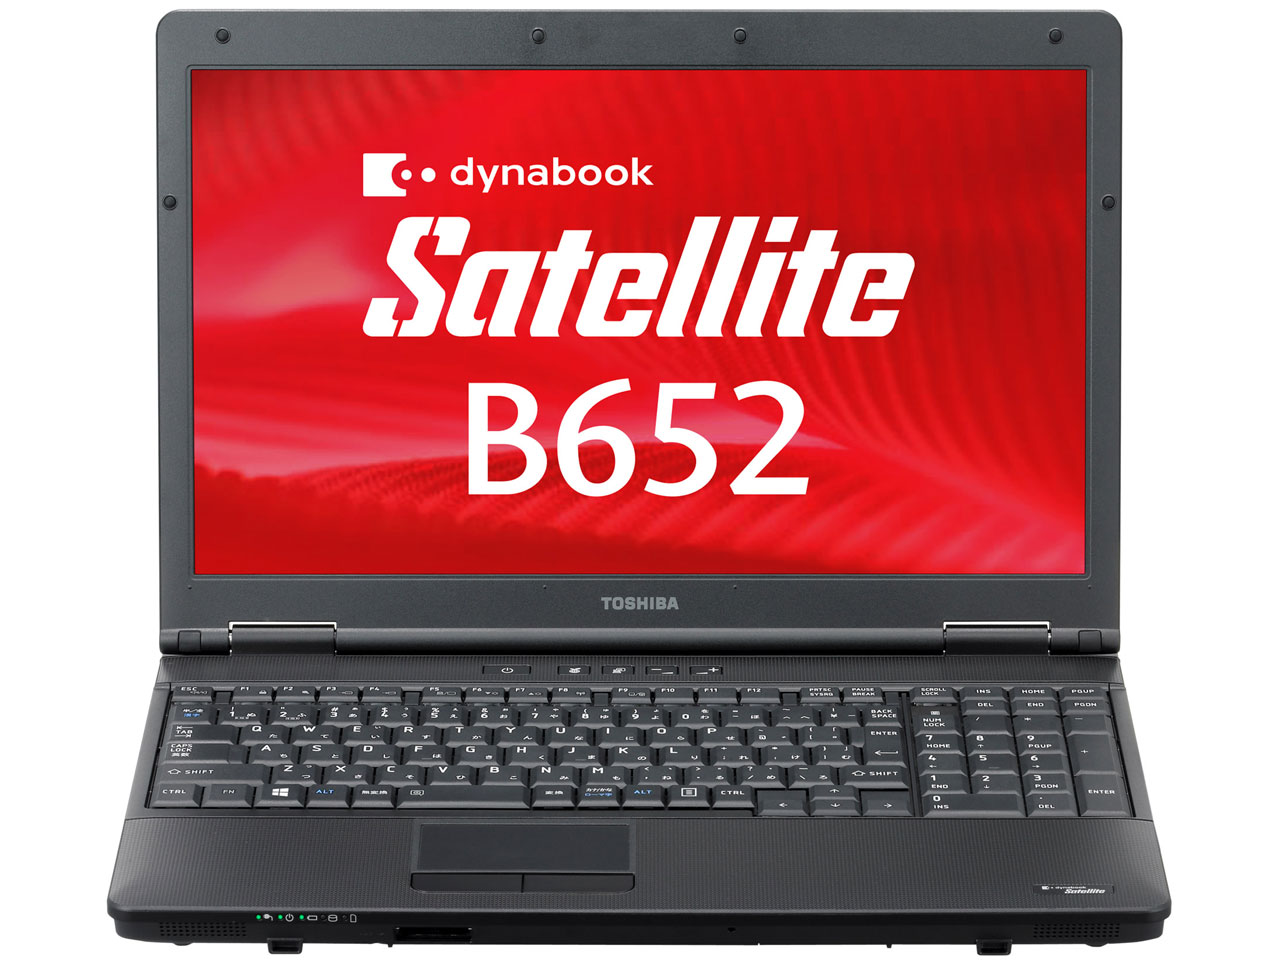 dynabook Satellite B652 B652/H PB652HABPKEA71